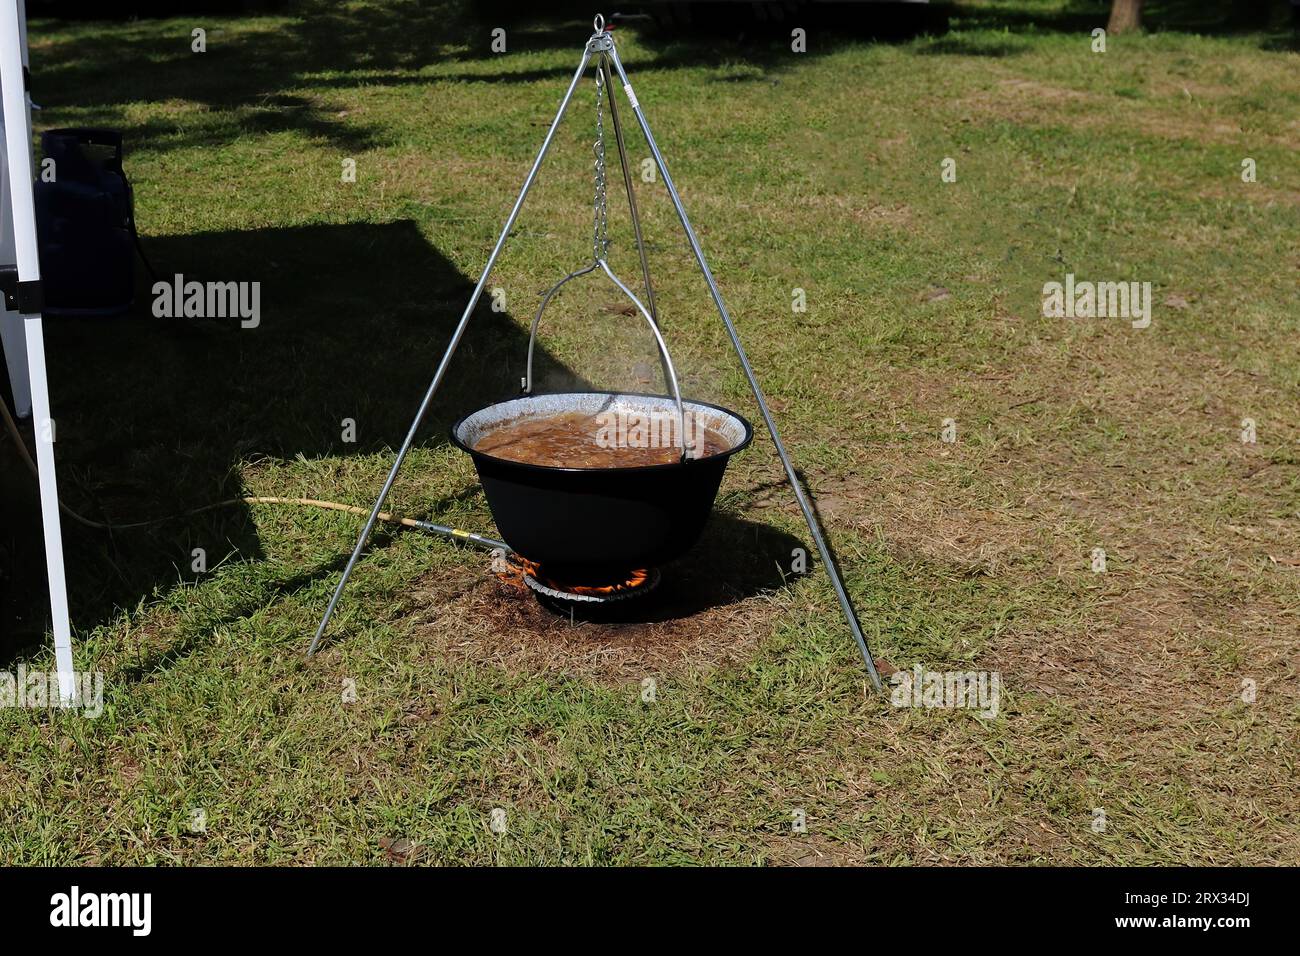 https://c8.alamy.com/comp/2RX34DJ/large-cast-iron-cooking-pot-stew-cooking-pot-cooking-stew-outside-in-the-garden-slavic-cooking-in-a-fair-in-summer-2RX34DJ.jpg